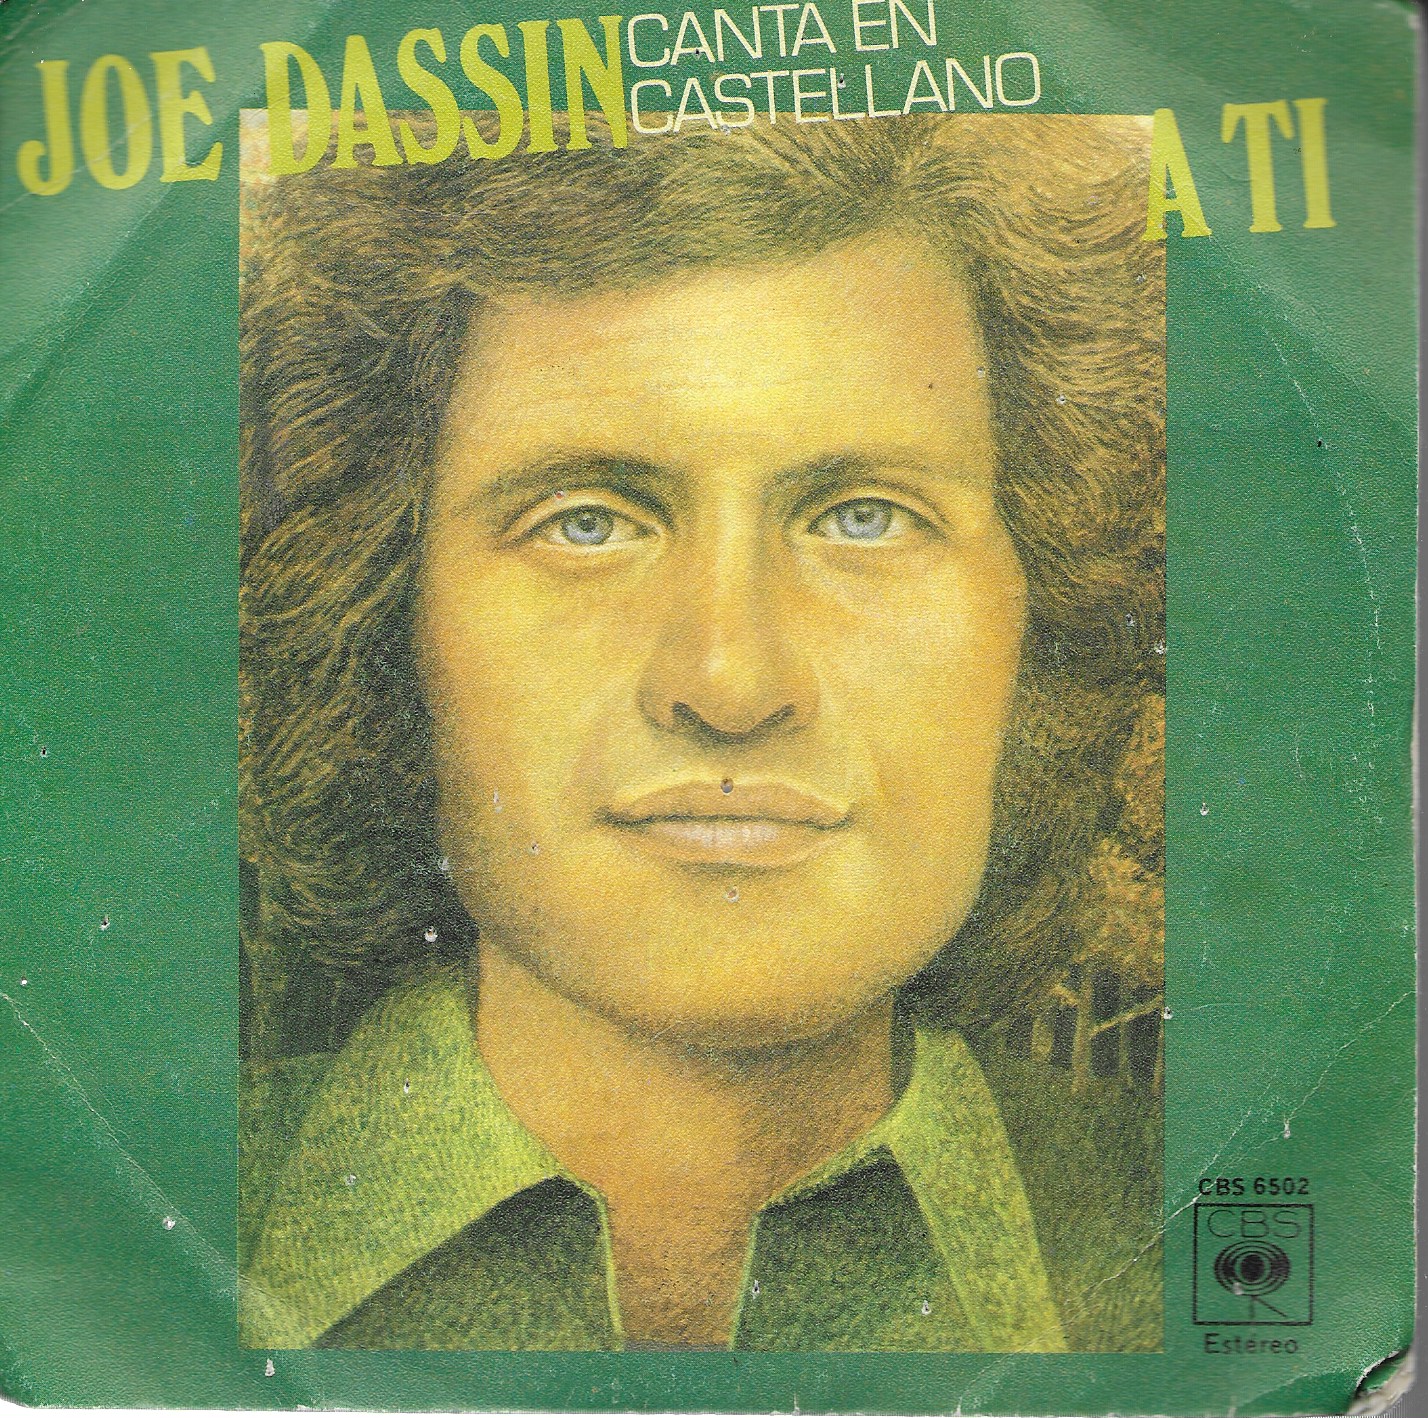 Joe Dassin canta en castellano. CBS 1978. 45RPM SP 2 títulos: A ti/Déjame dormir